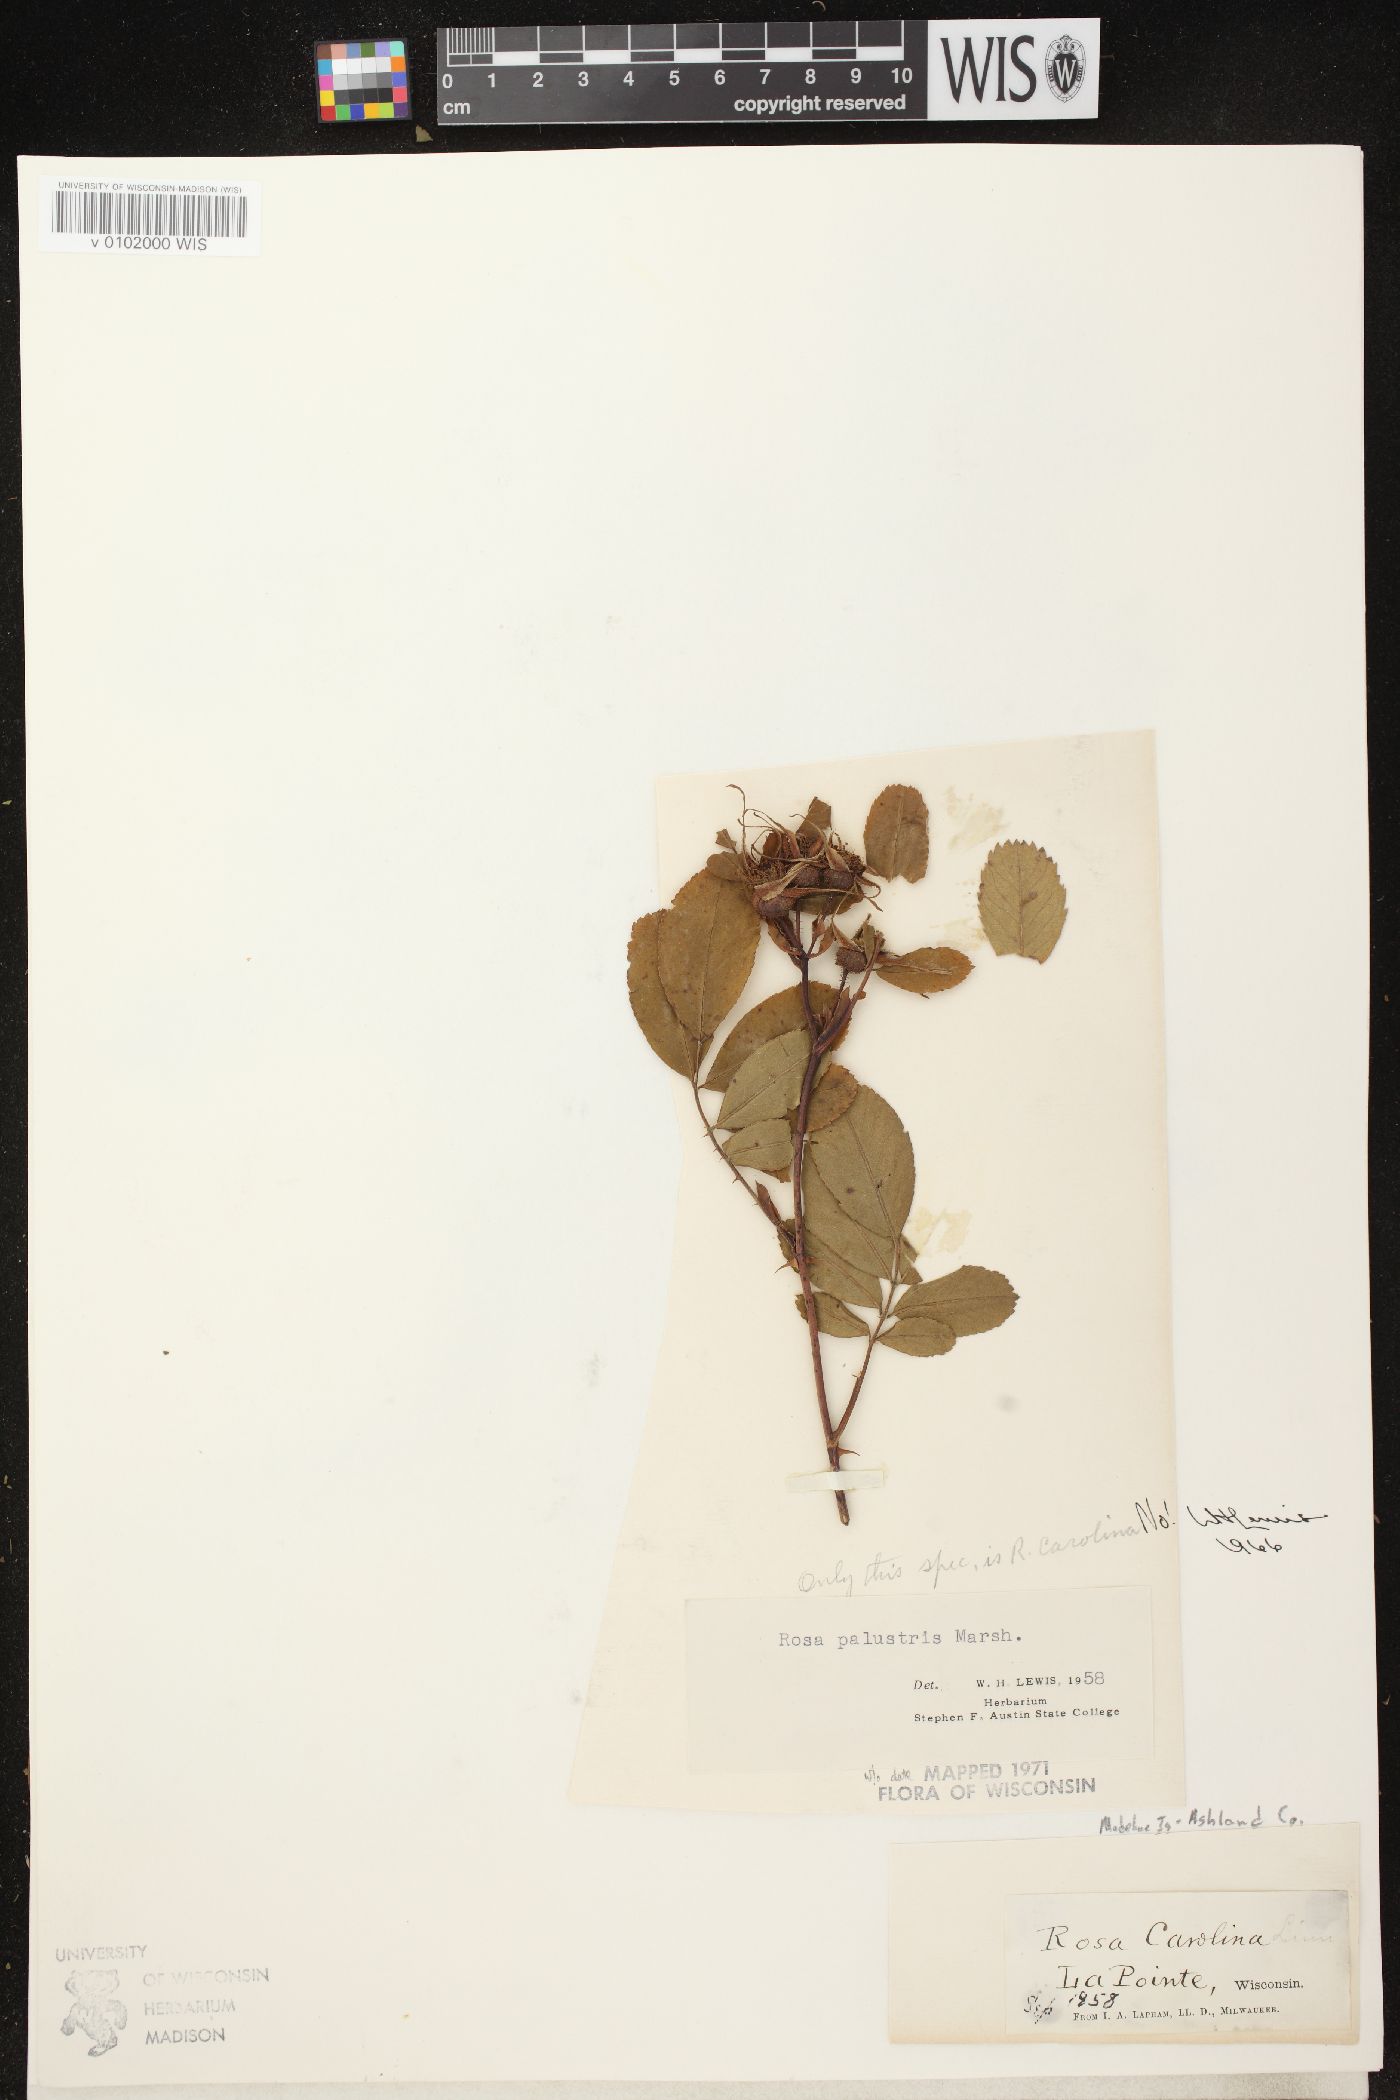 Rosa palustris image